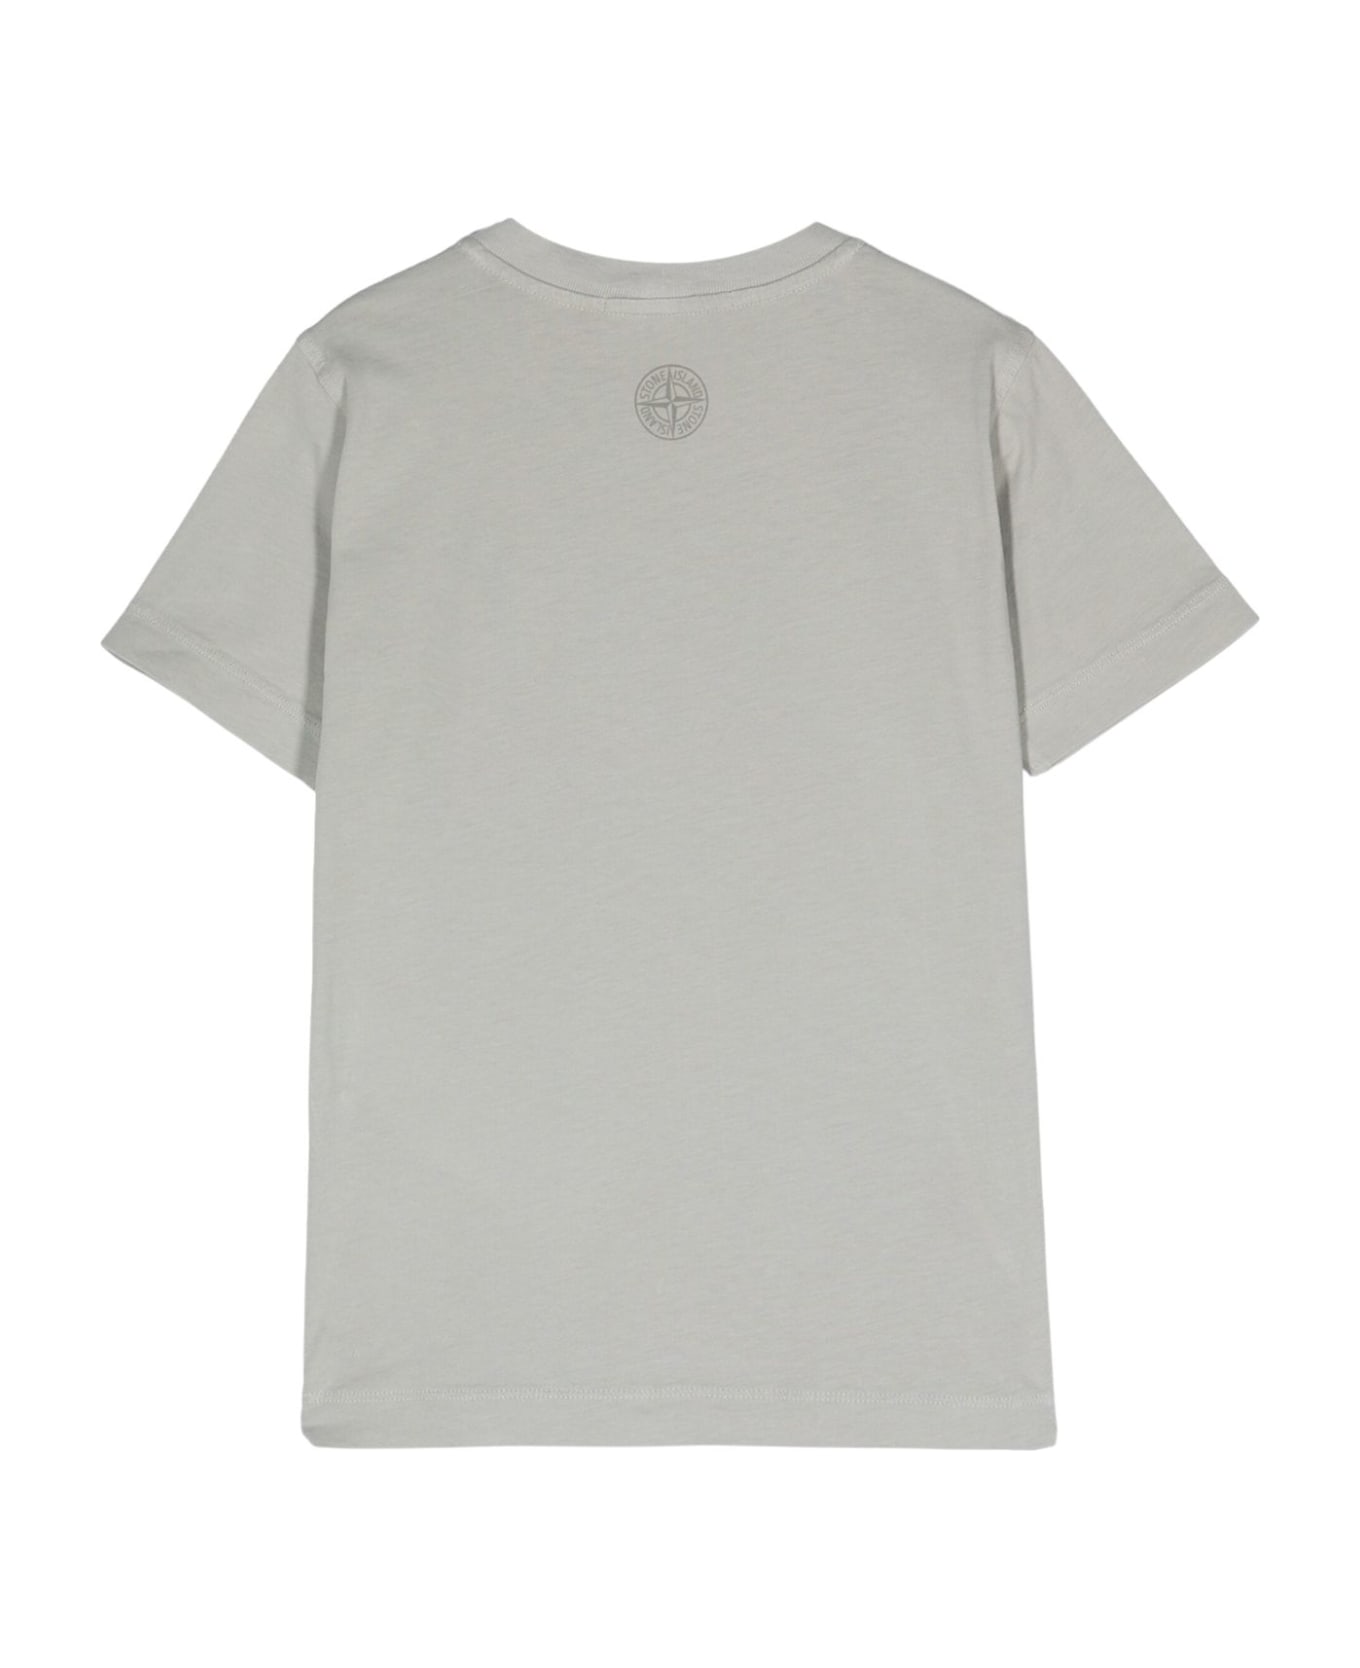 Stone Island Junior T Shirt - Pearl Grey